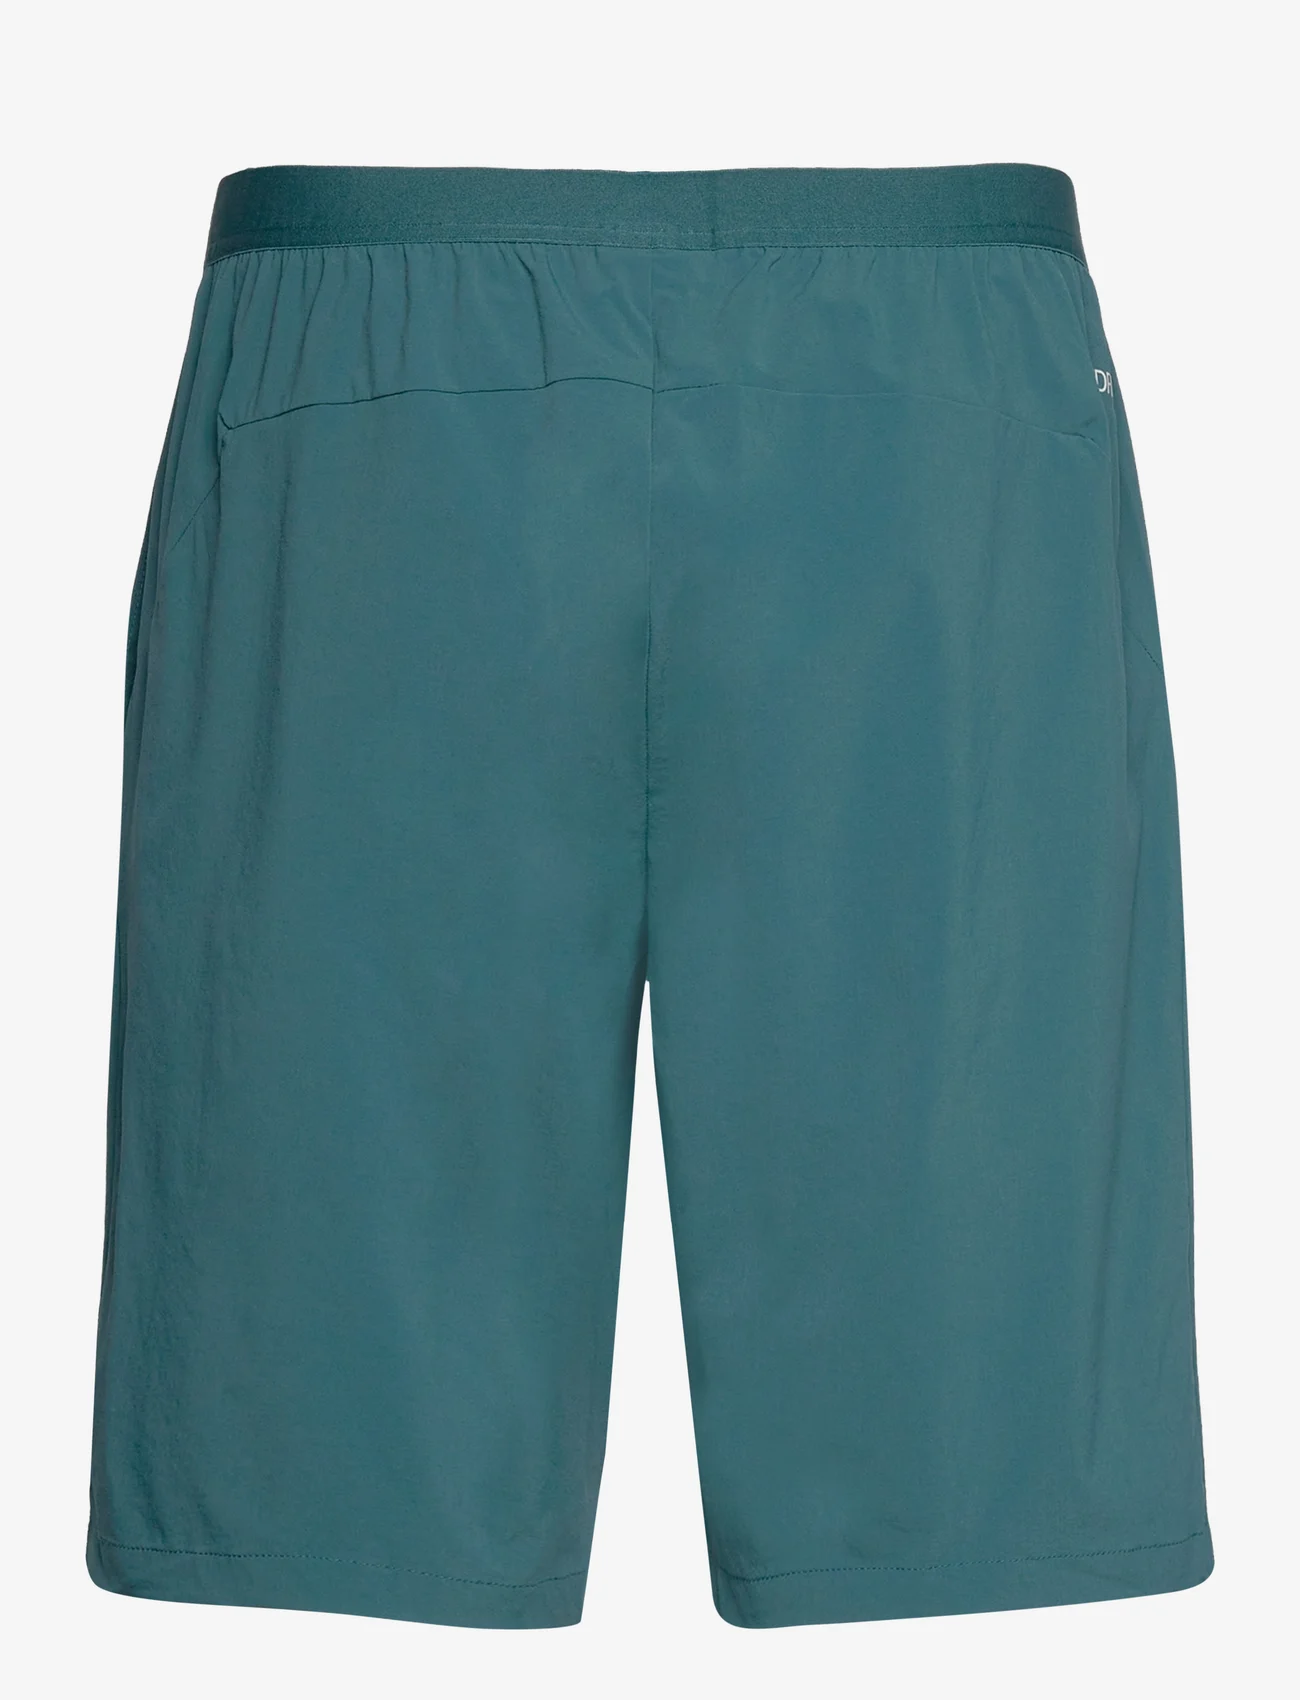 Jack Wolfskin - PRELIGHT SHORTS M - sports shorts - emerald - 1